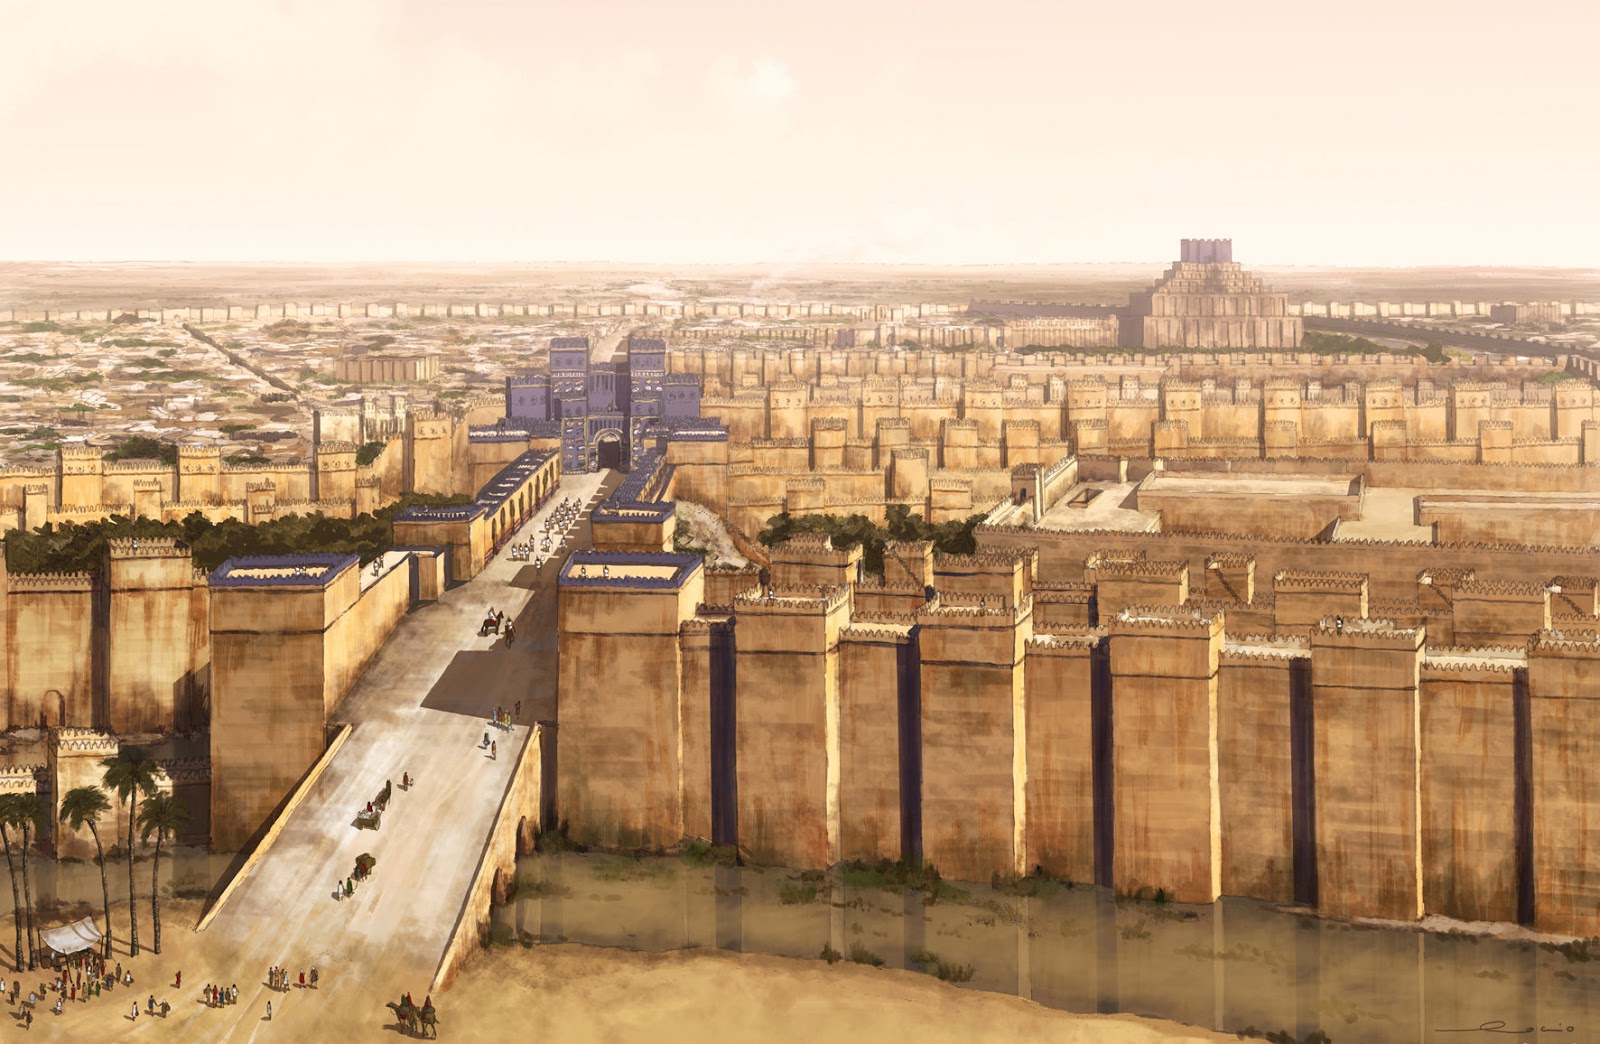 bensozia: Excavating Babylon